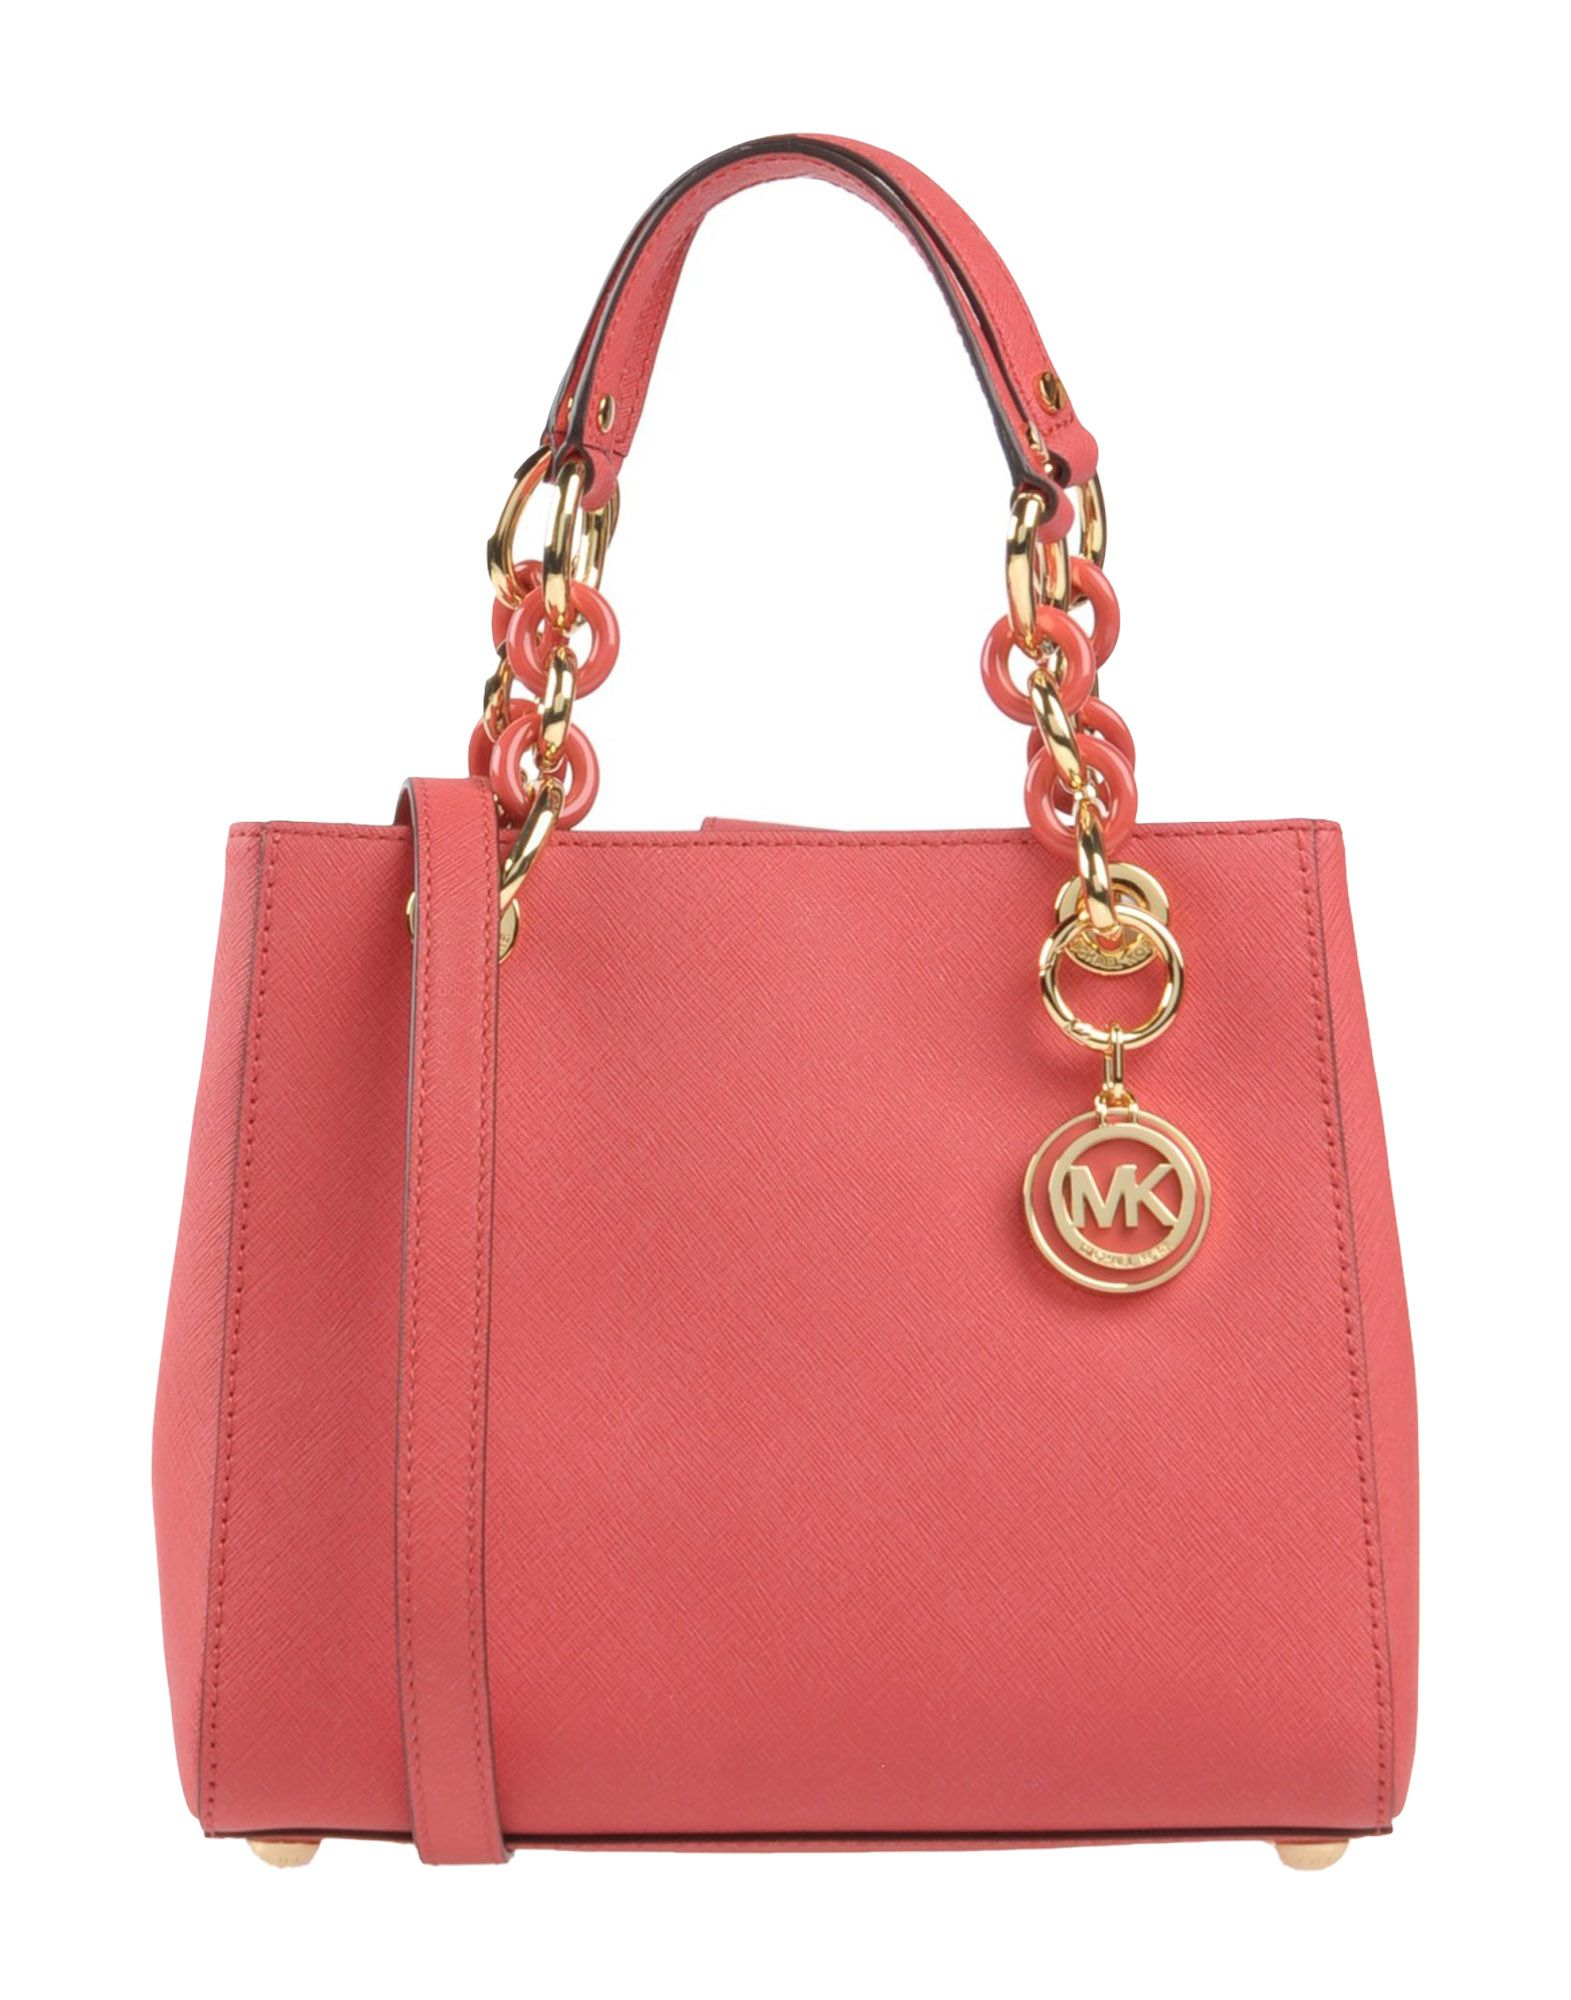 Lyst - Michael Michael Kors Handbag in Pink